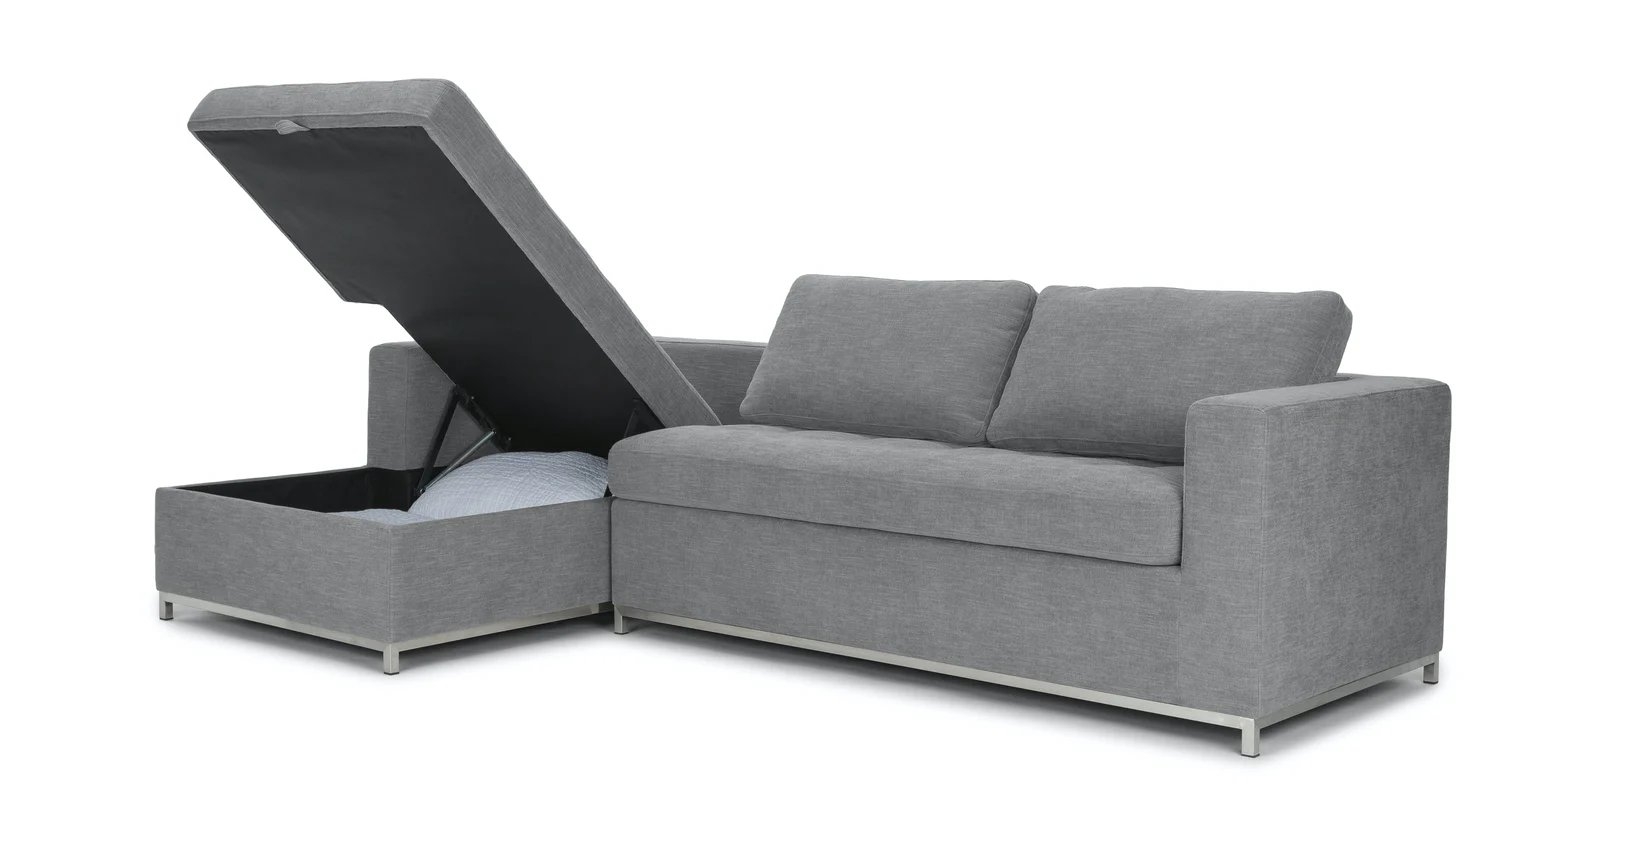 Soma Dawn Gray Left Sofa Bed - Image 1